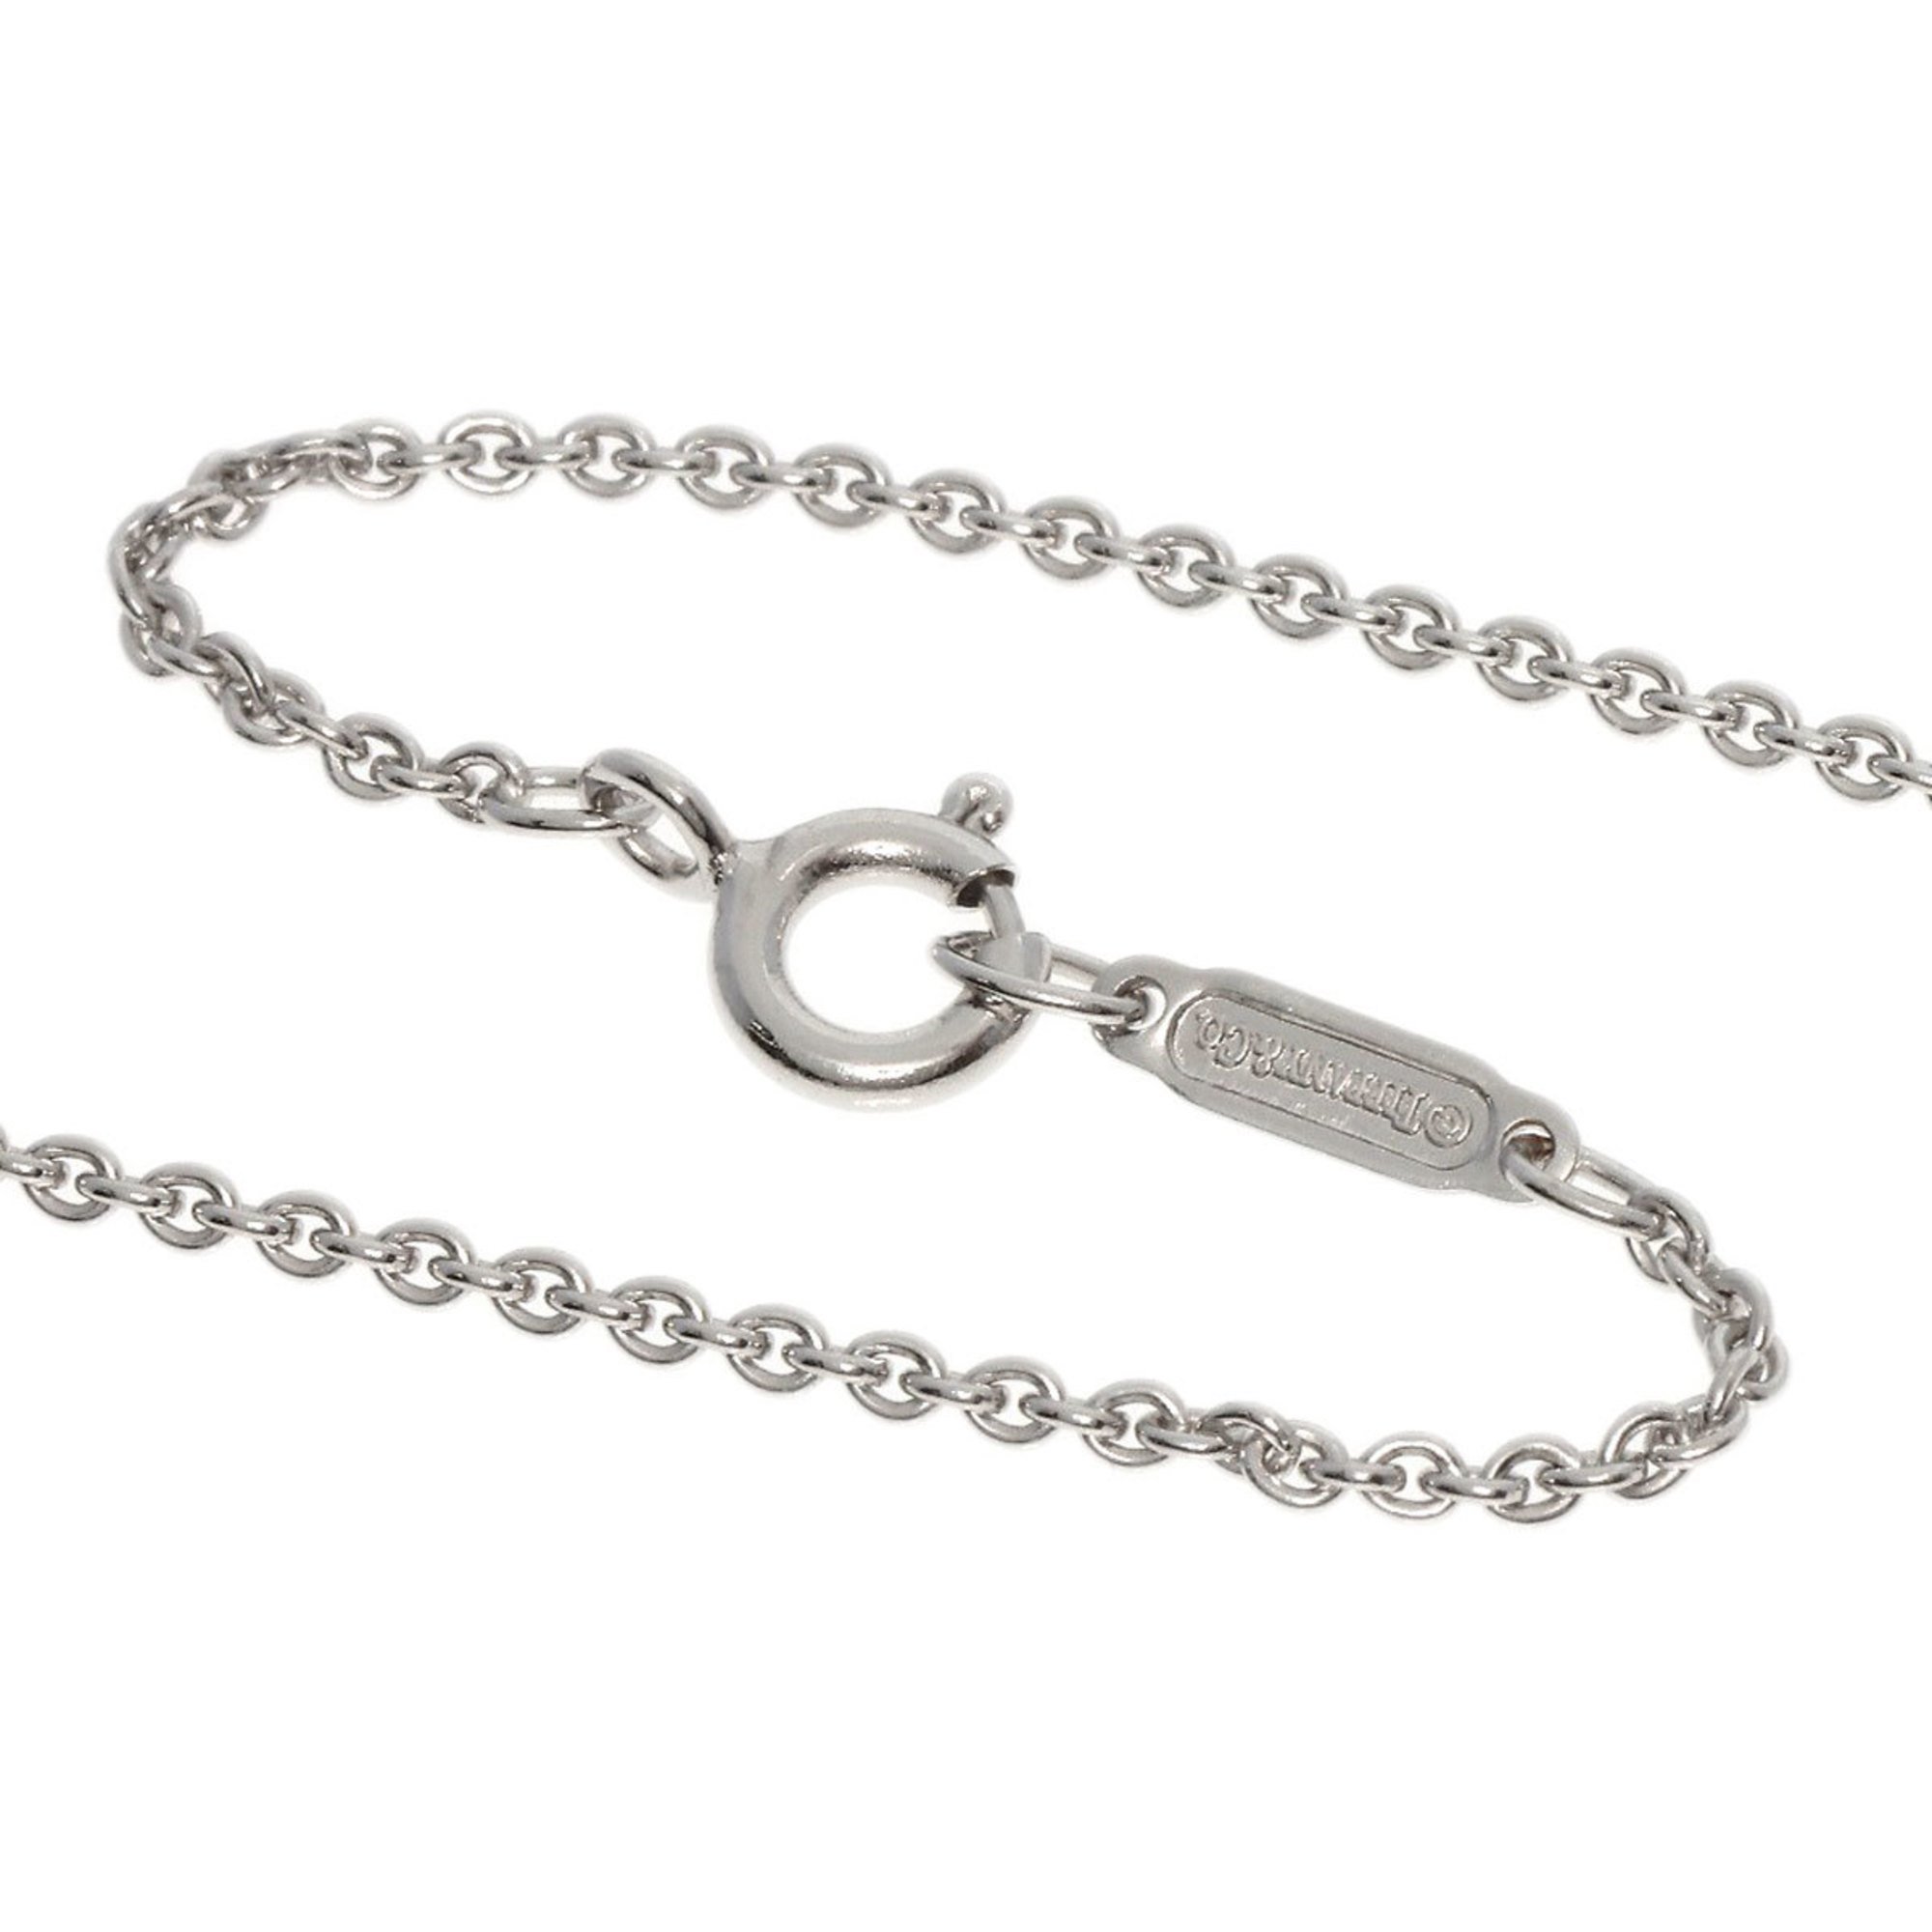 Tiffany Signature Cross Stitch Diamond Necklace in 18k White Gold for Women